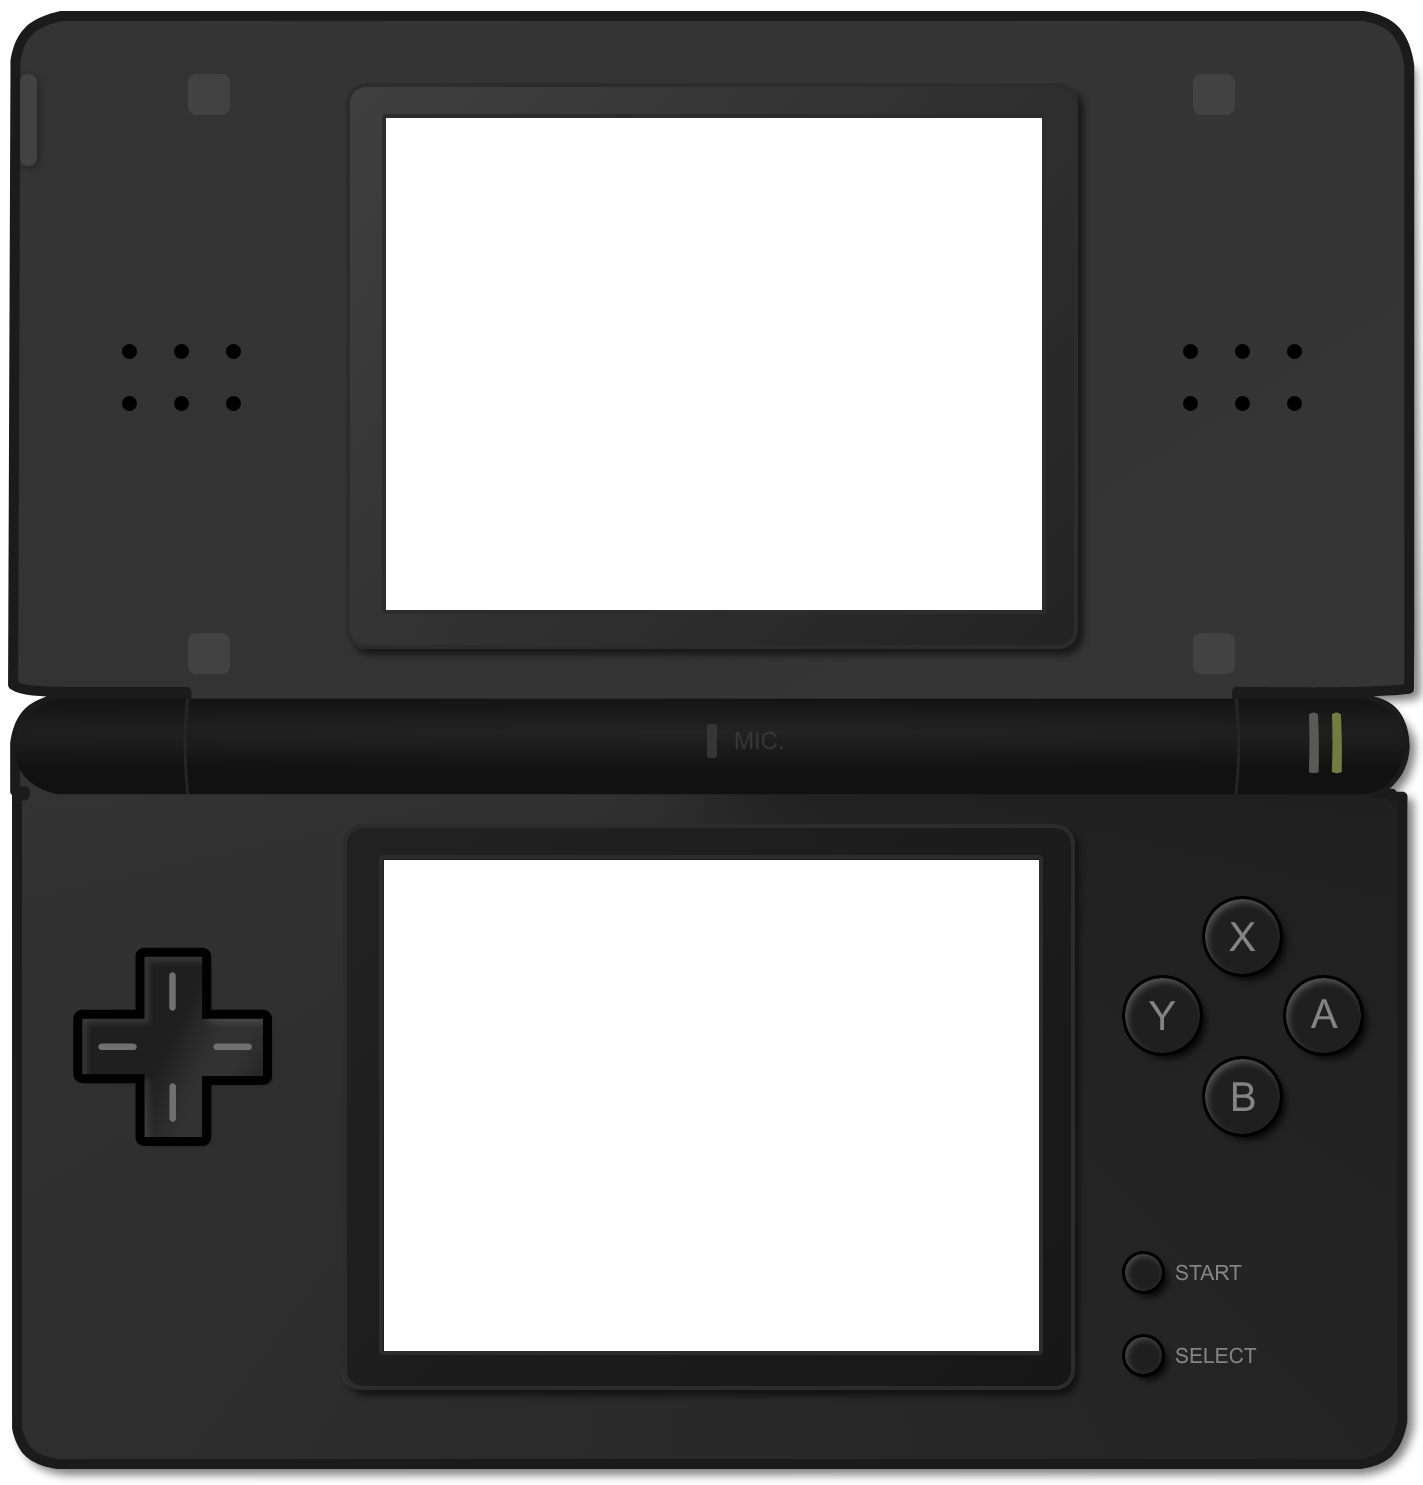 Nintendo DS displaying trailer footage